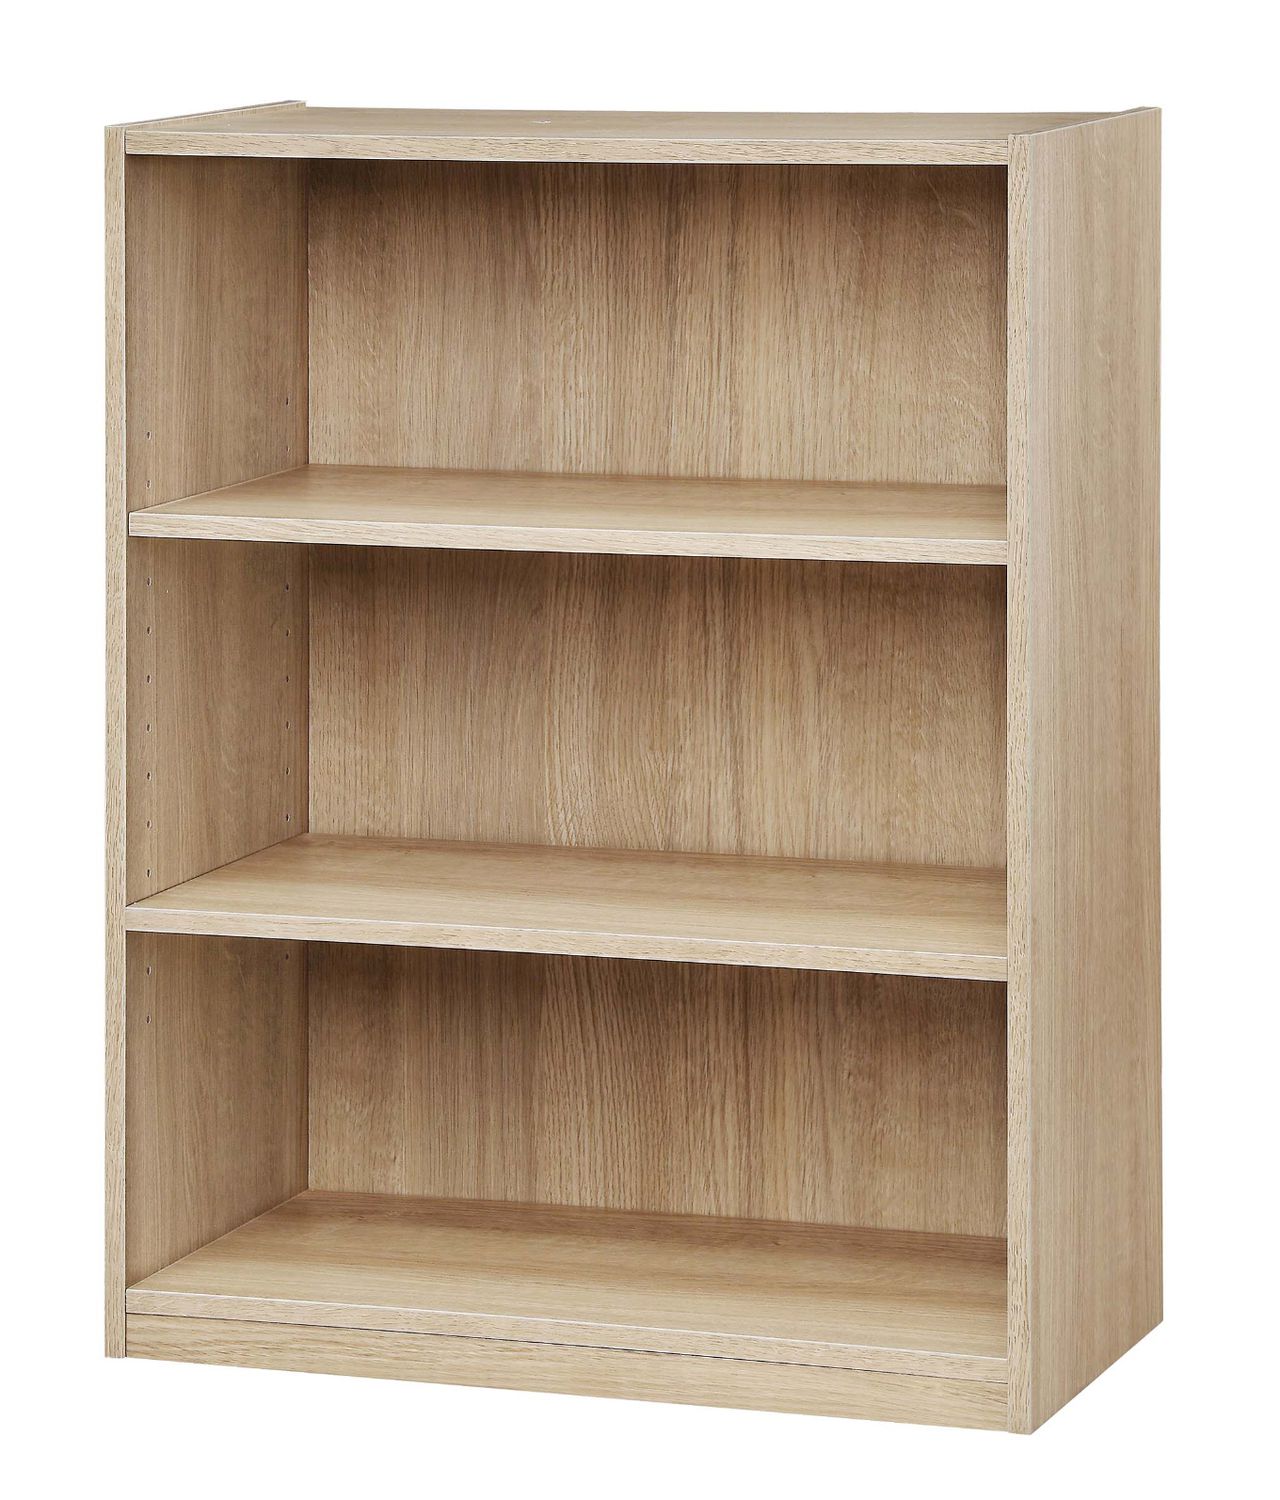 Mainstays 3 Shelf Bookcase True Black, Oak Bookcases With Adjustable Shelves